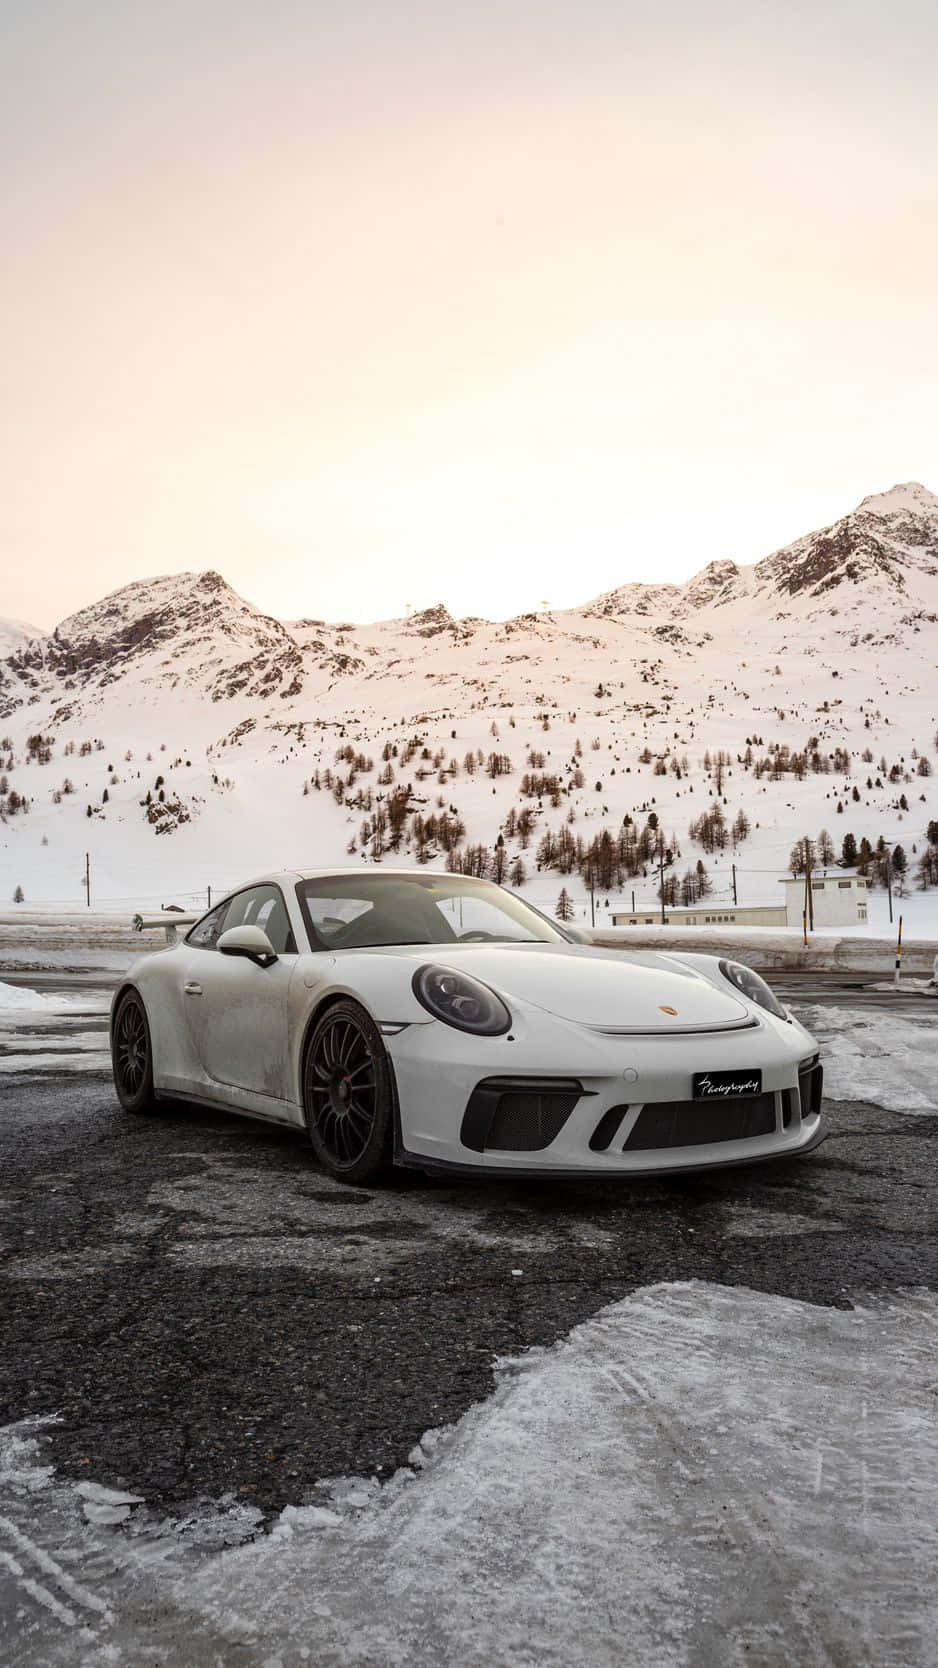 Elegantecoche Deportivo Porsche En El Fondo De Pantalla Del Iphone. Fondo de pantalla